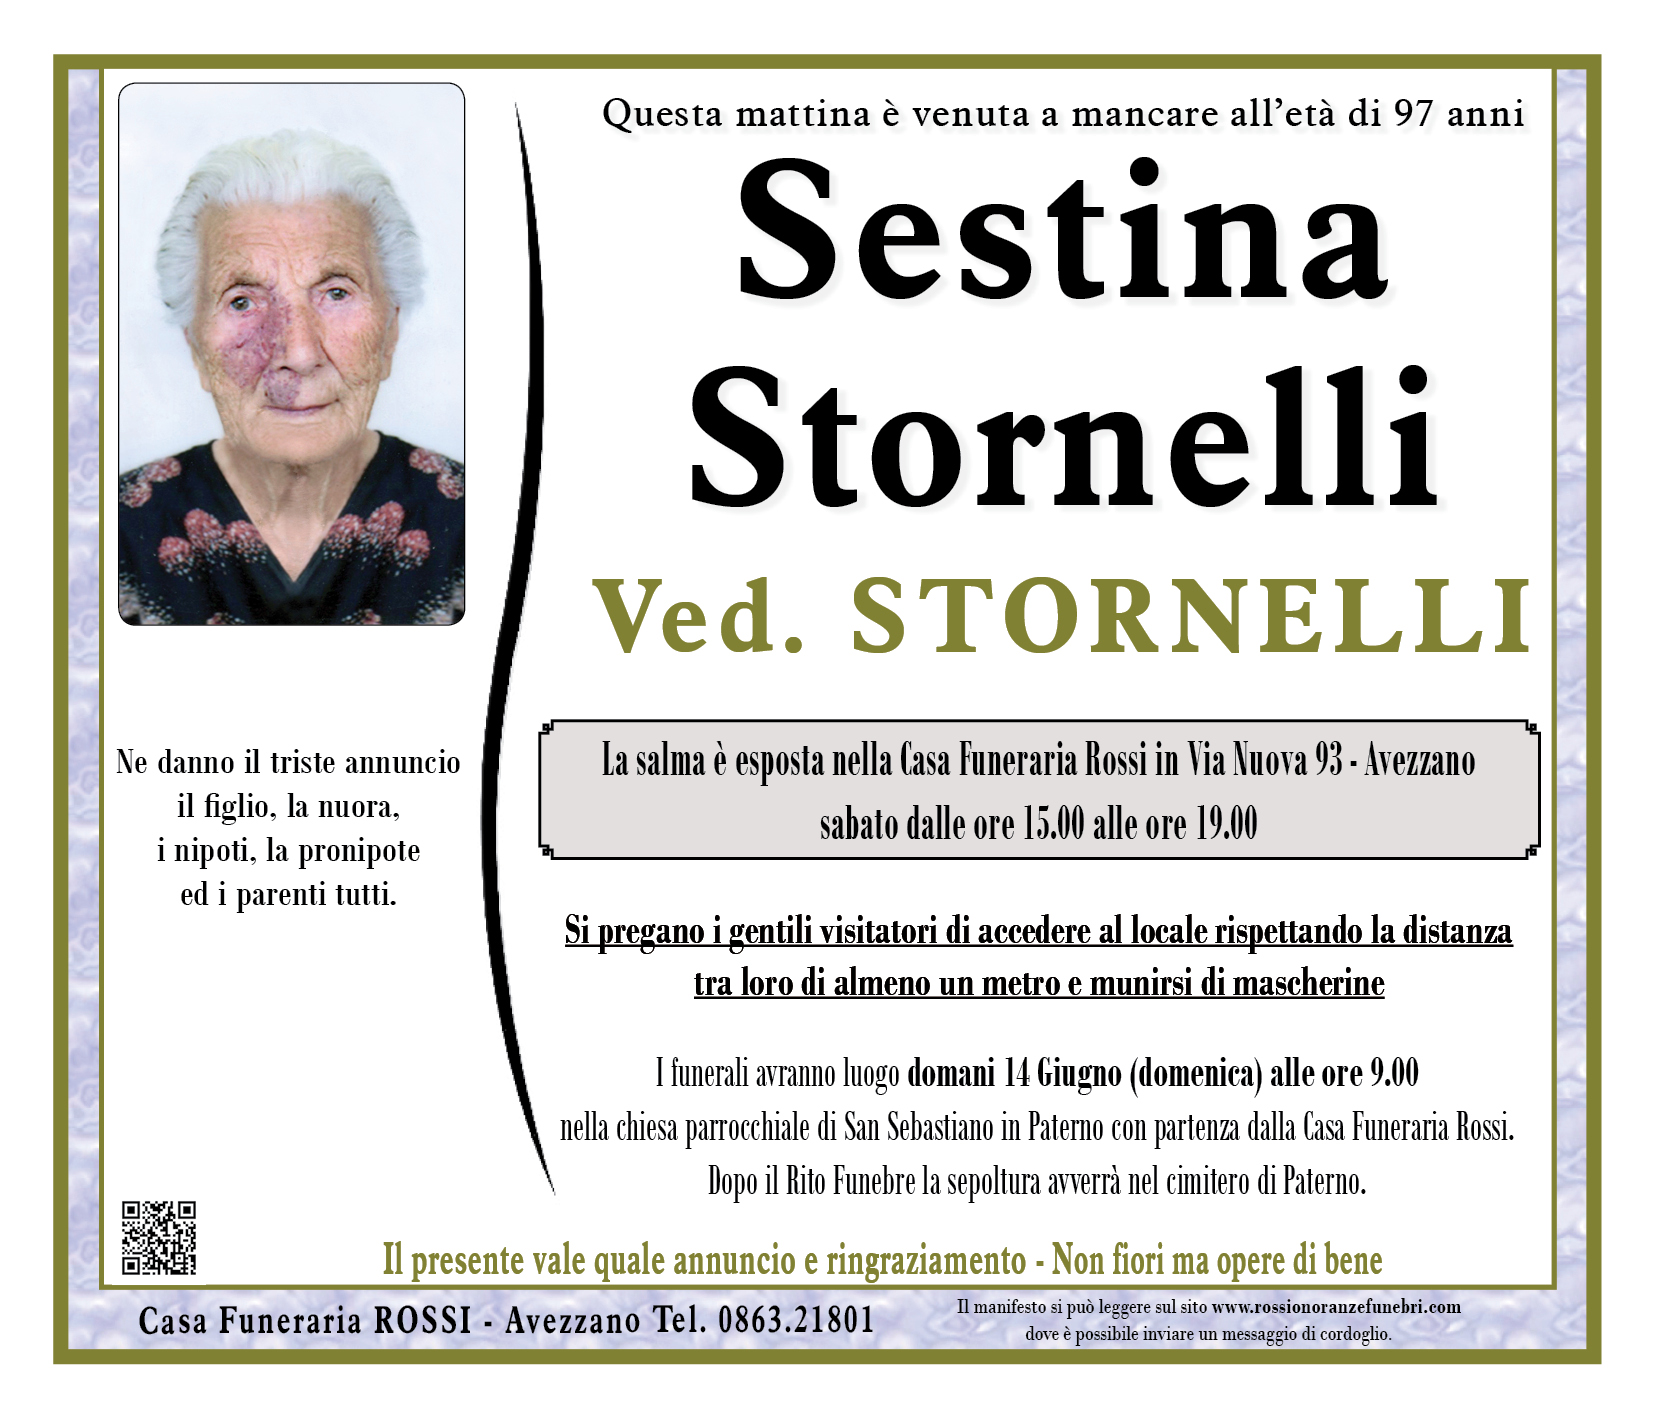 Sestina Stornelli